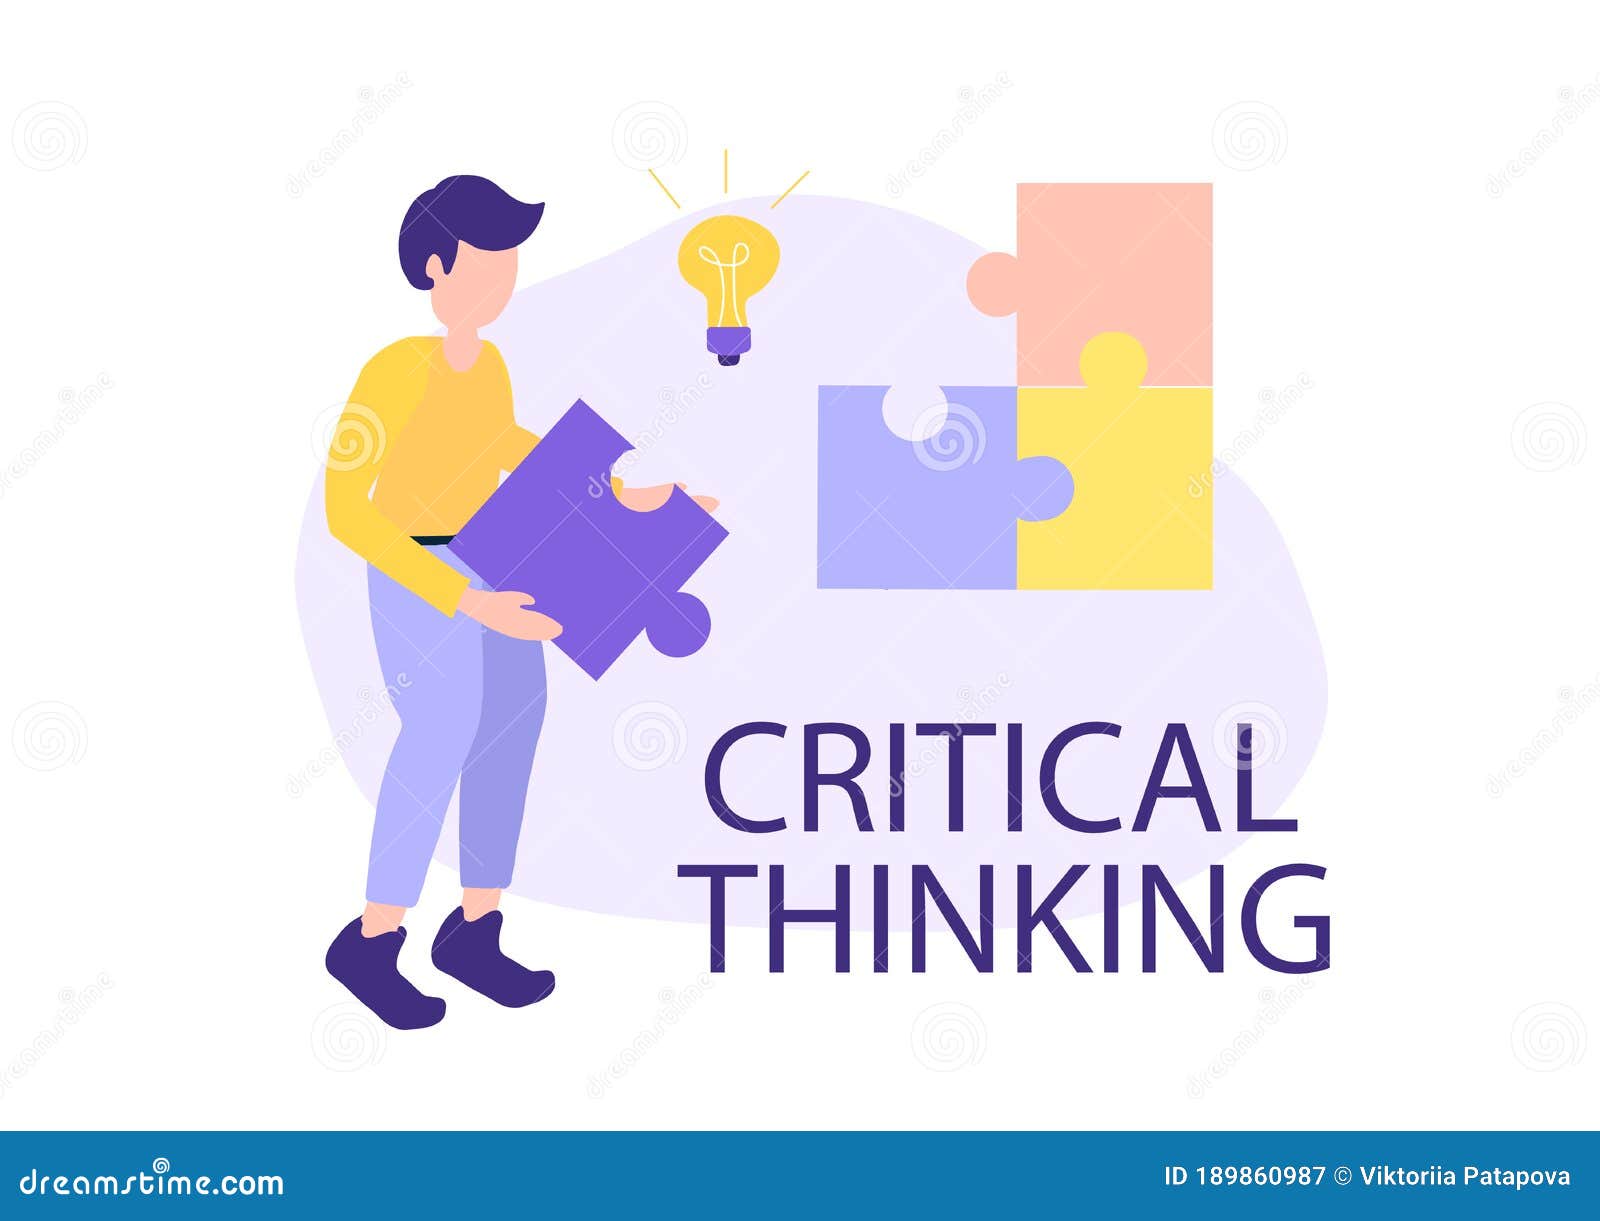 critical thinking illustration